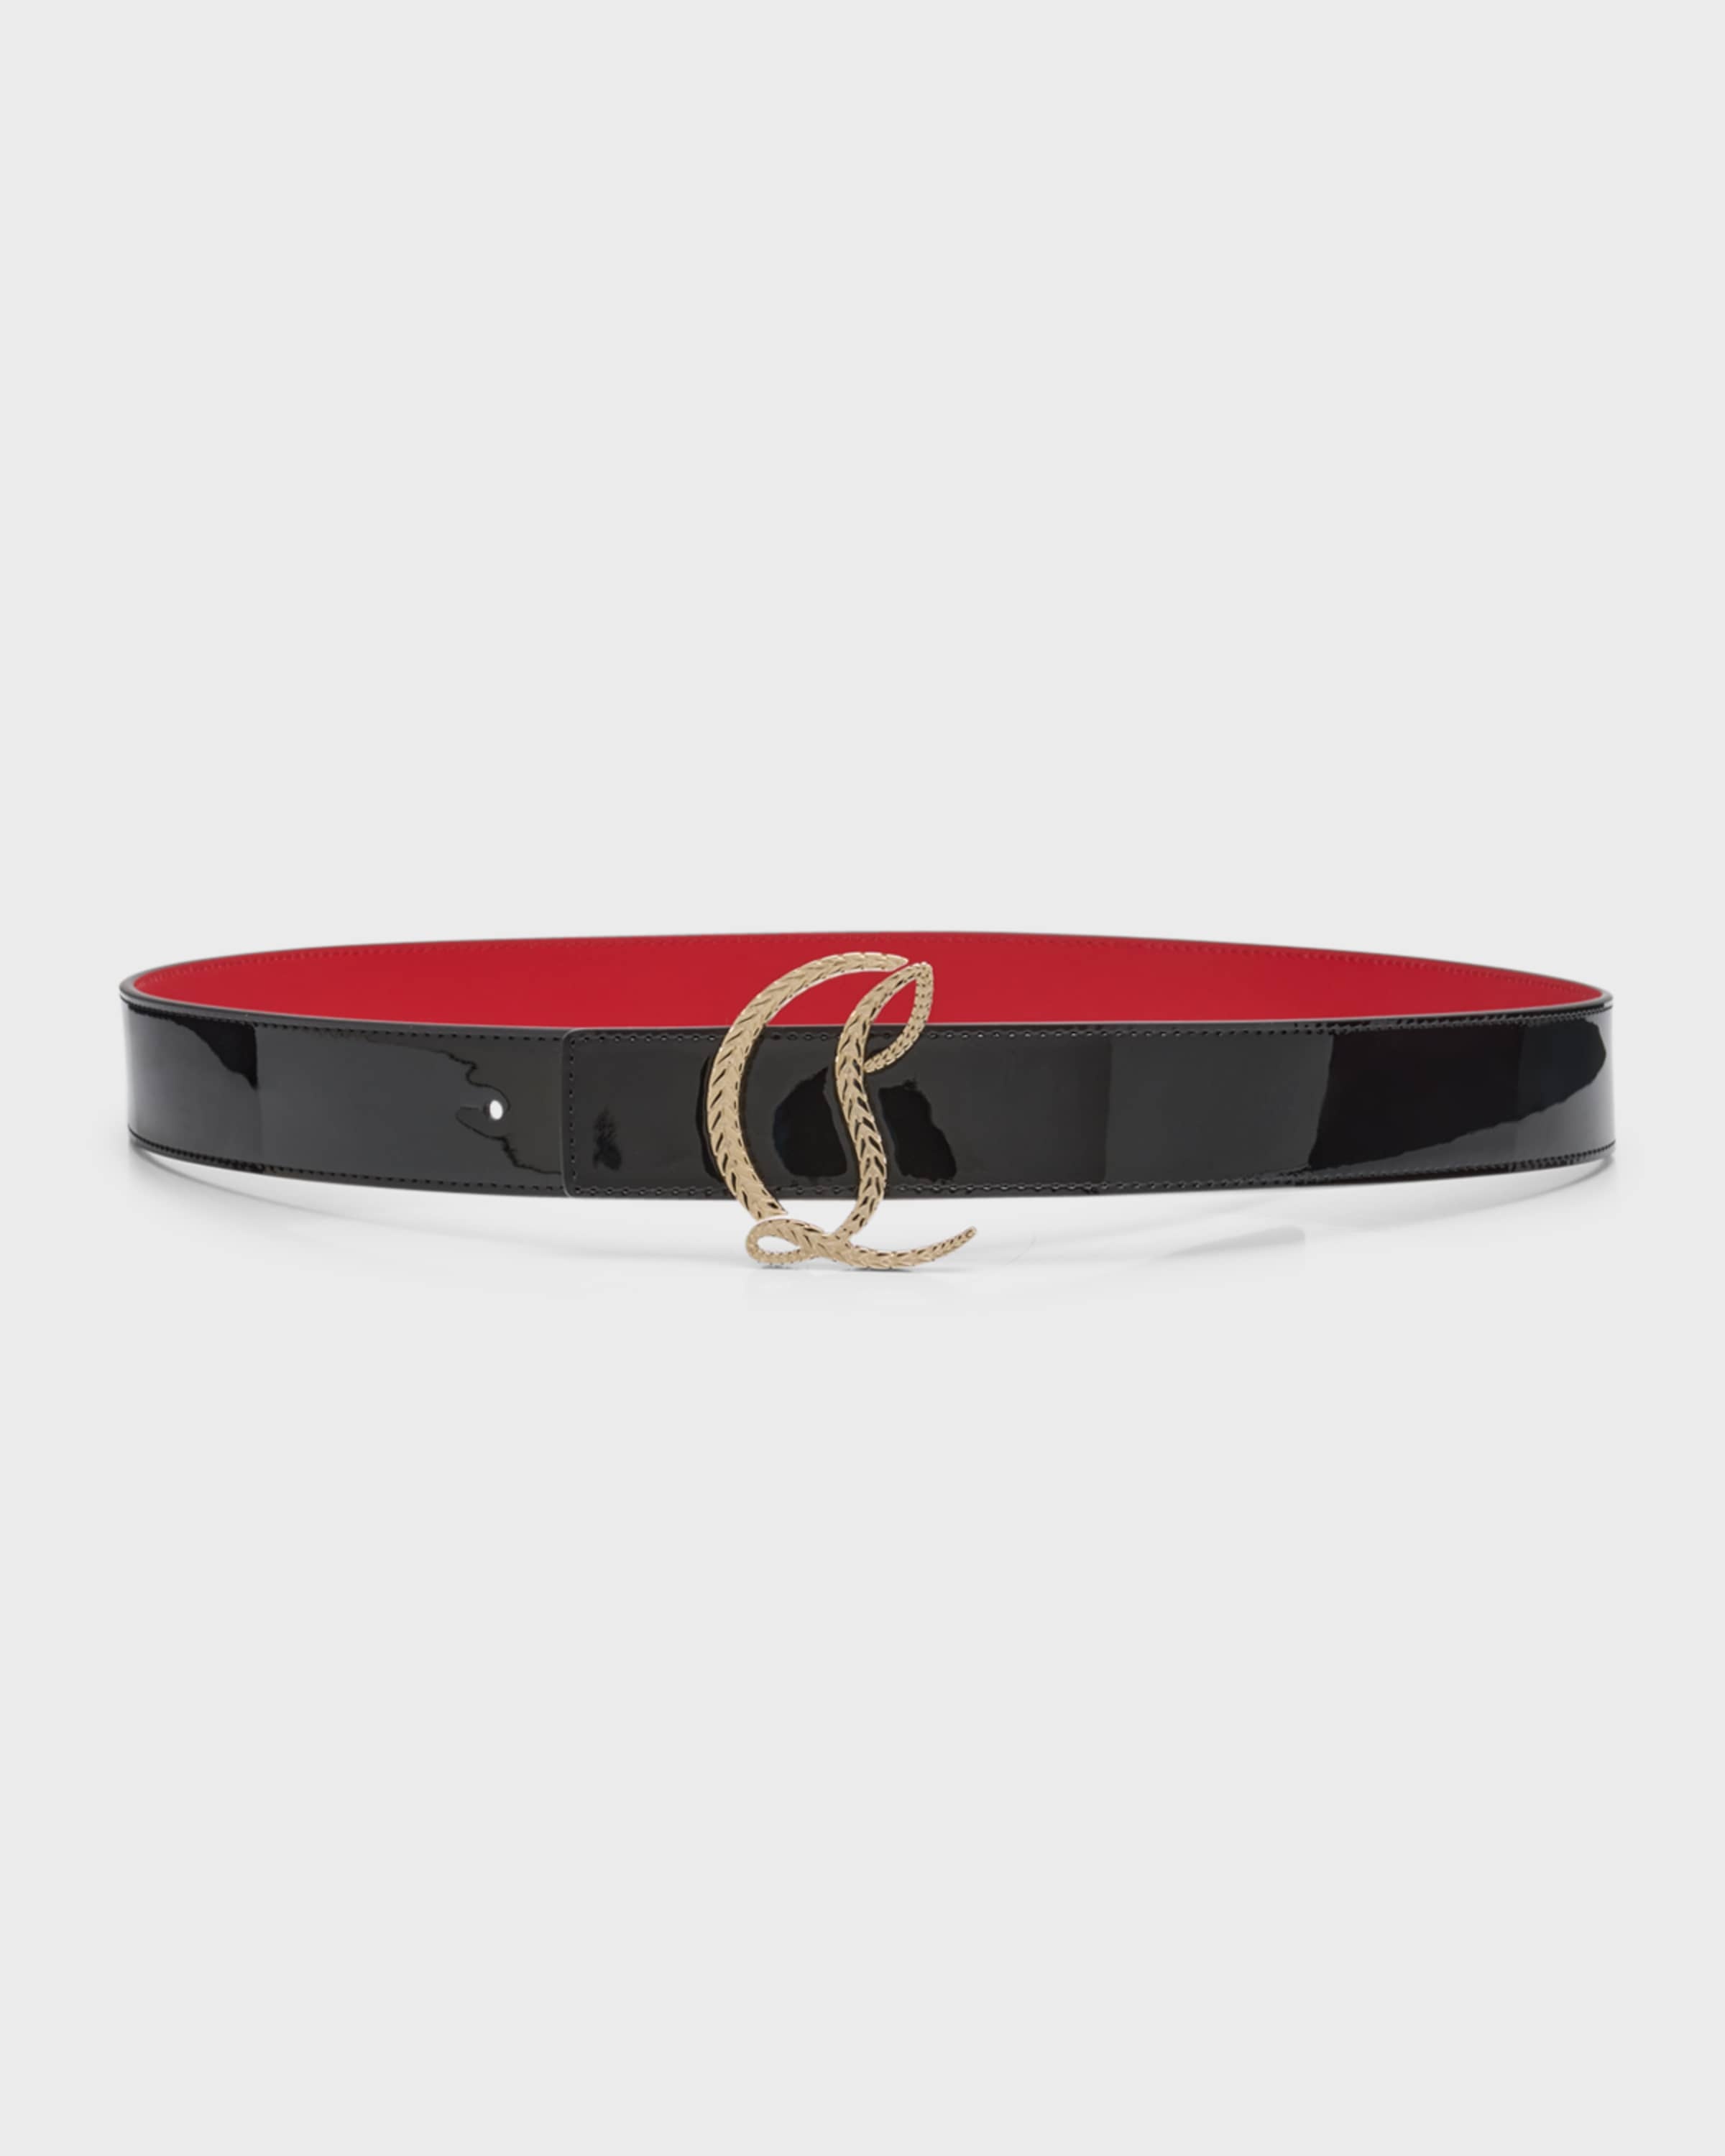 CL Patent Leather Belt - 1